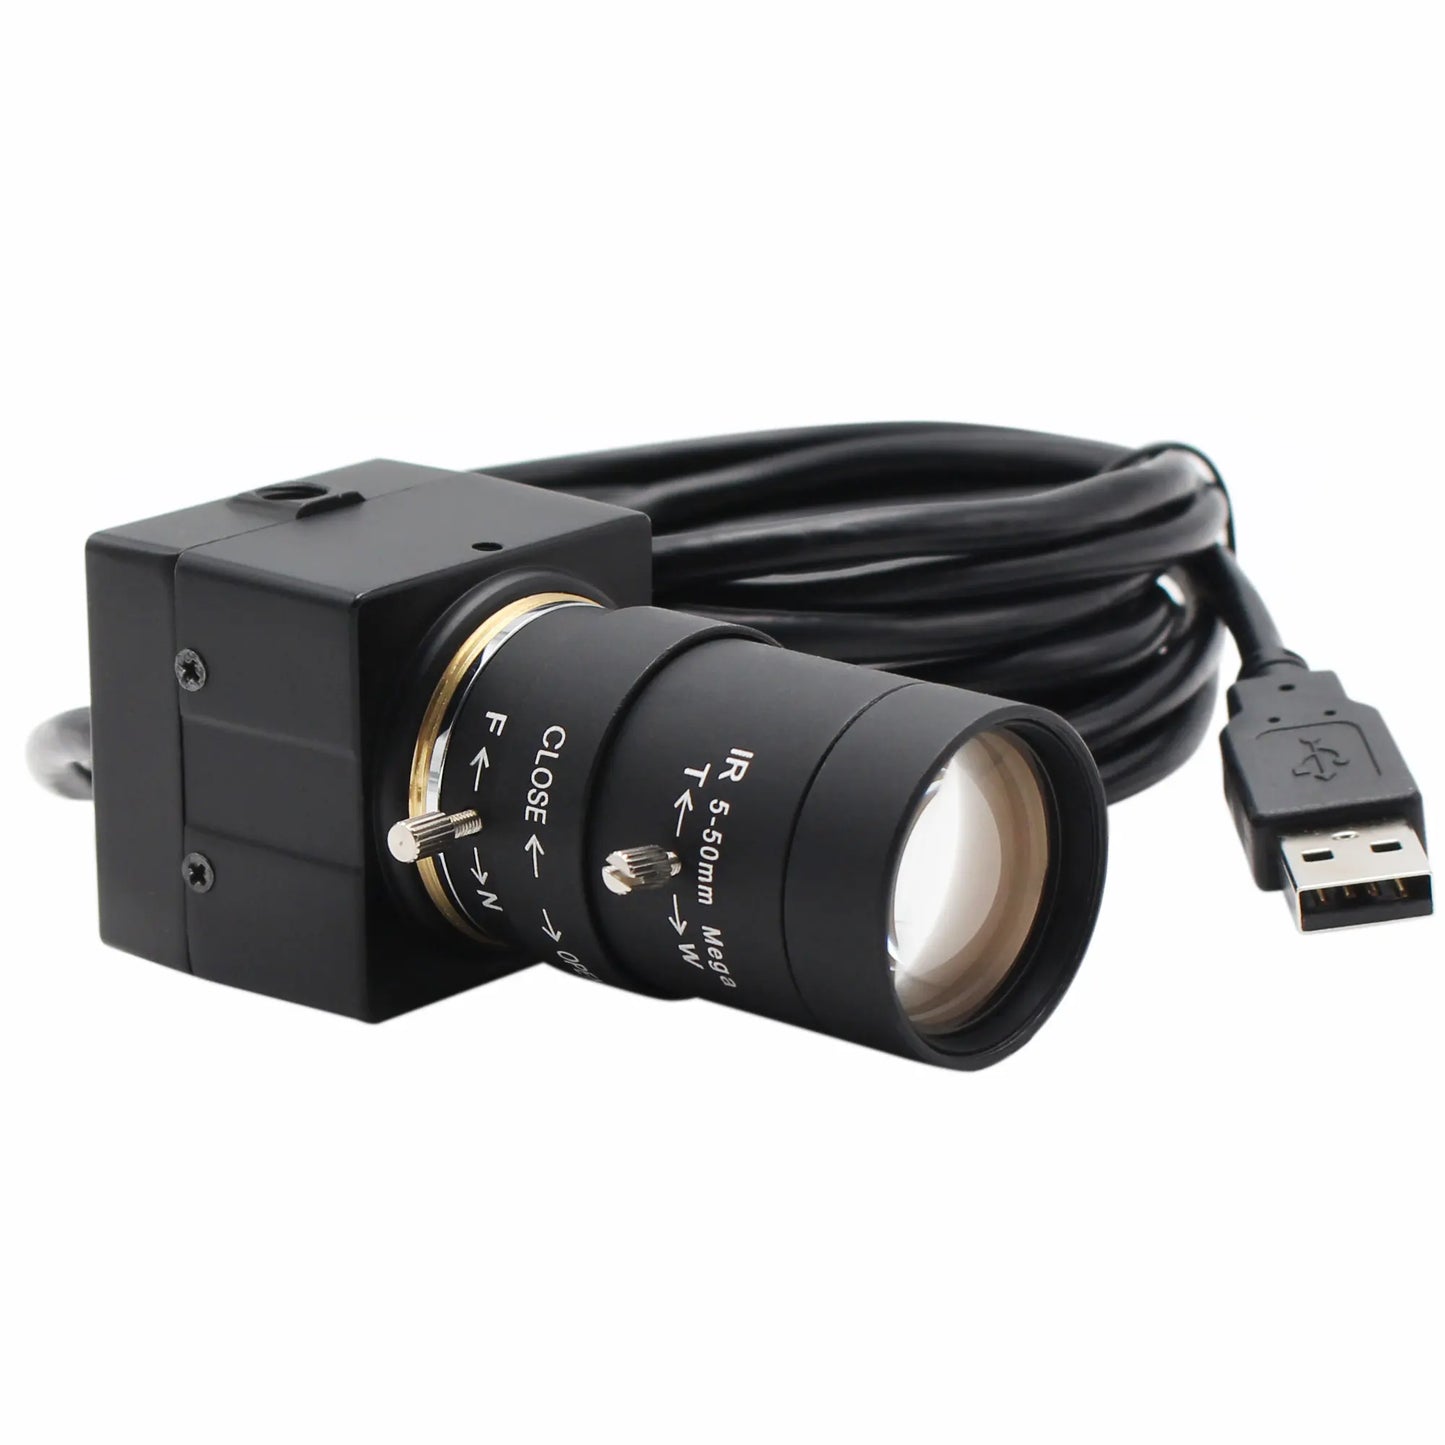 16MP USB Camera with Manual Focus Lens for, - IMX298 Sensor, 4656x3496 CMOS